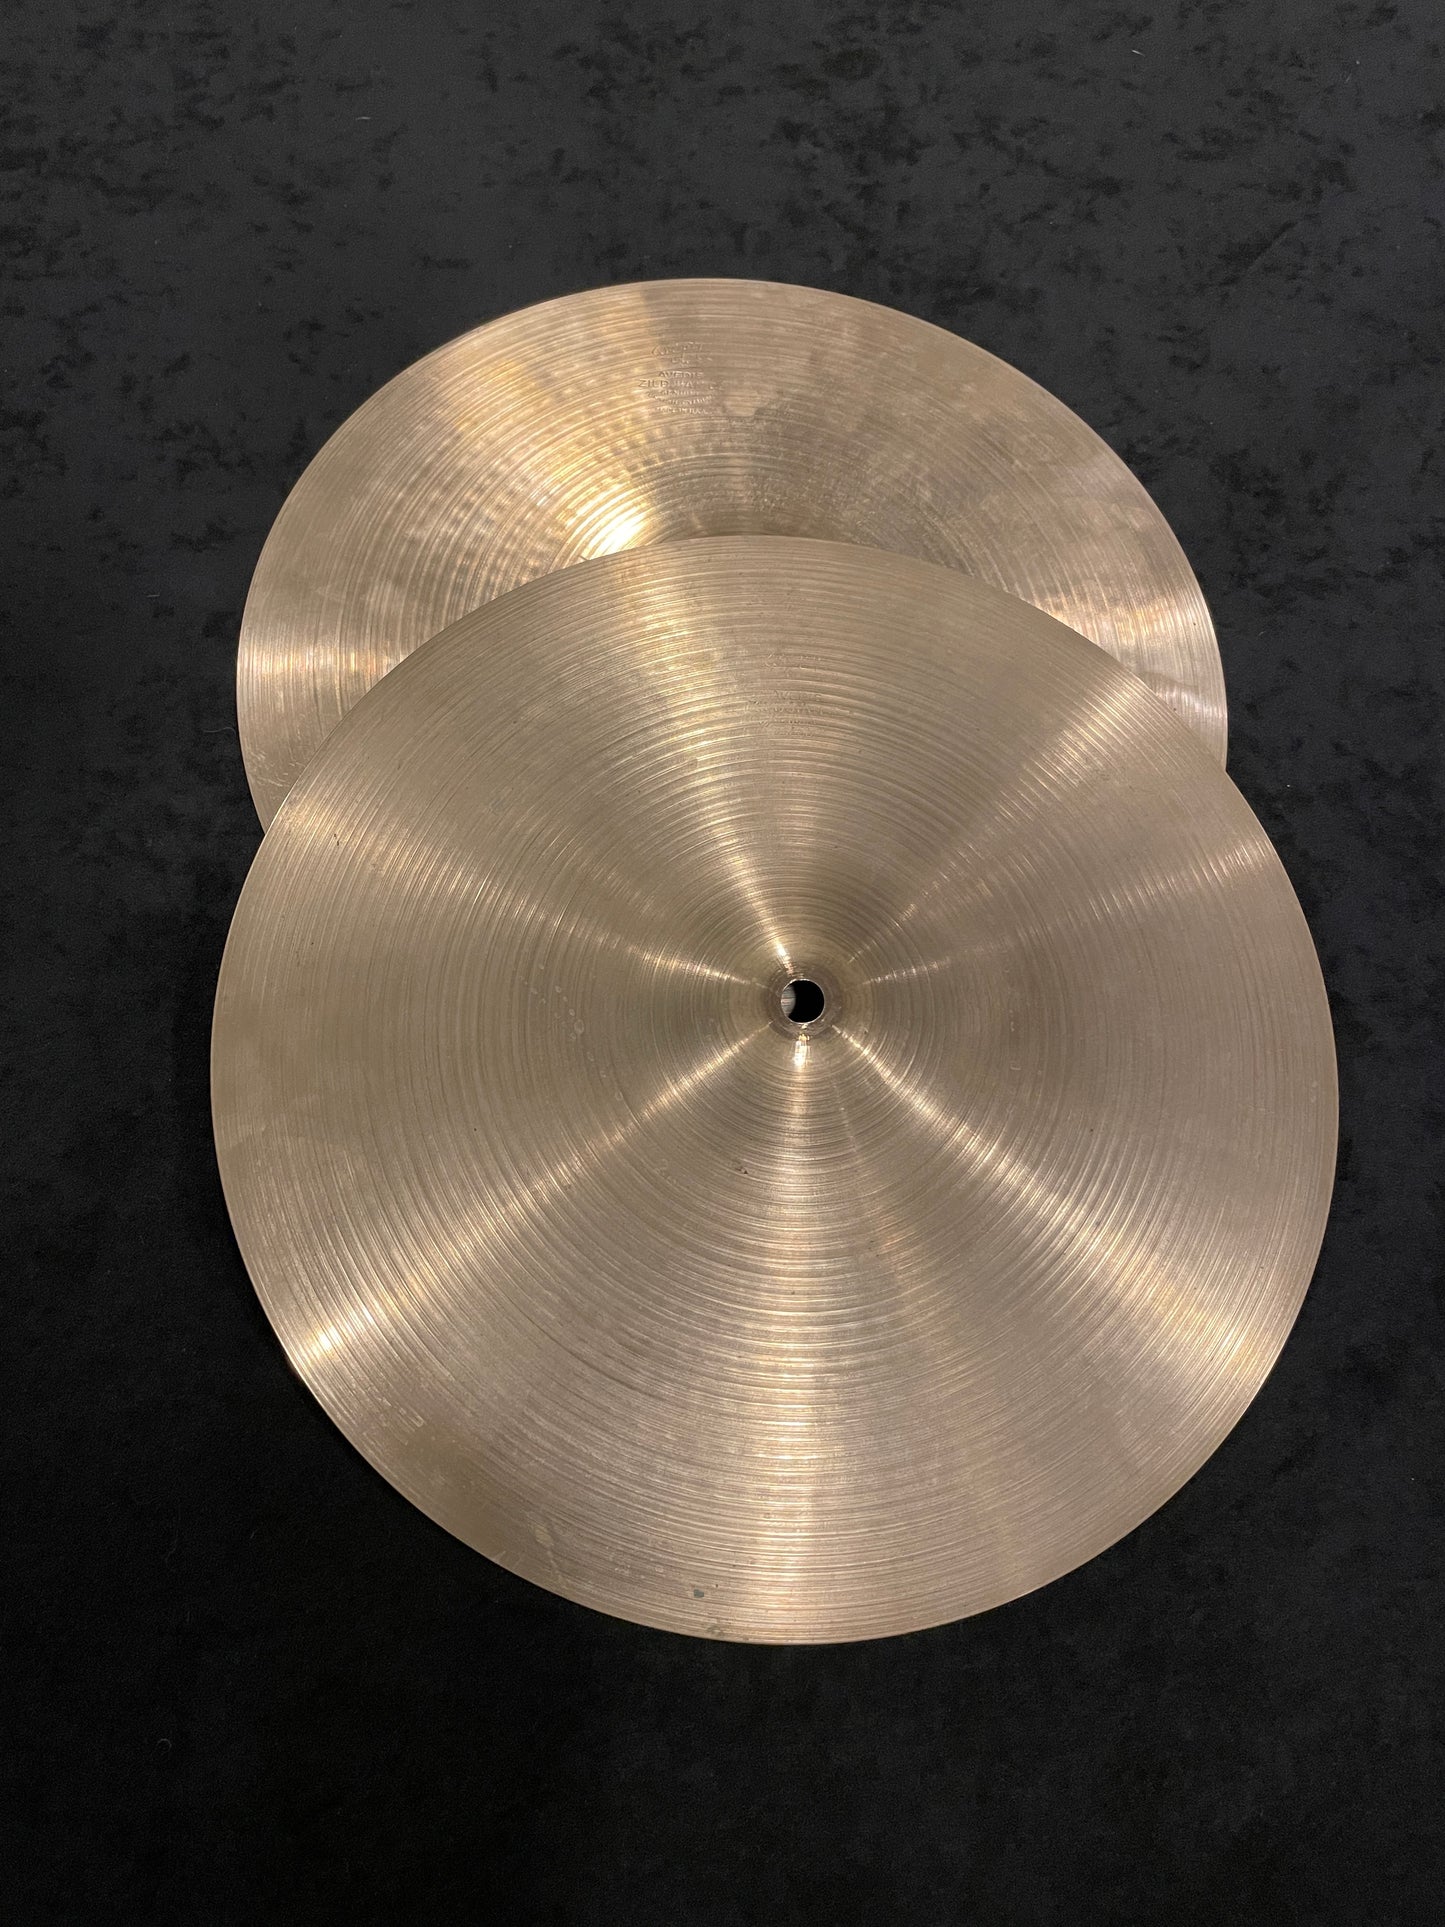 14" Zildjian A 1960s New Beat Hi-Hat Cymbal Pair 850g/1220g #861